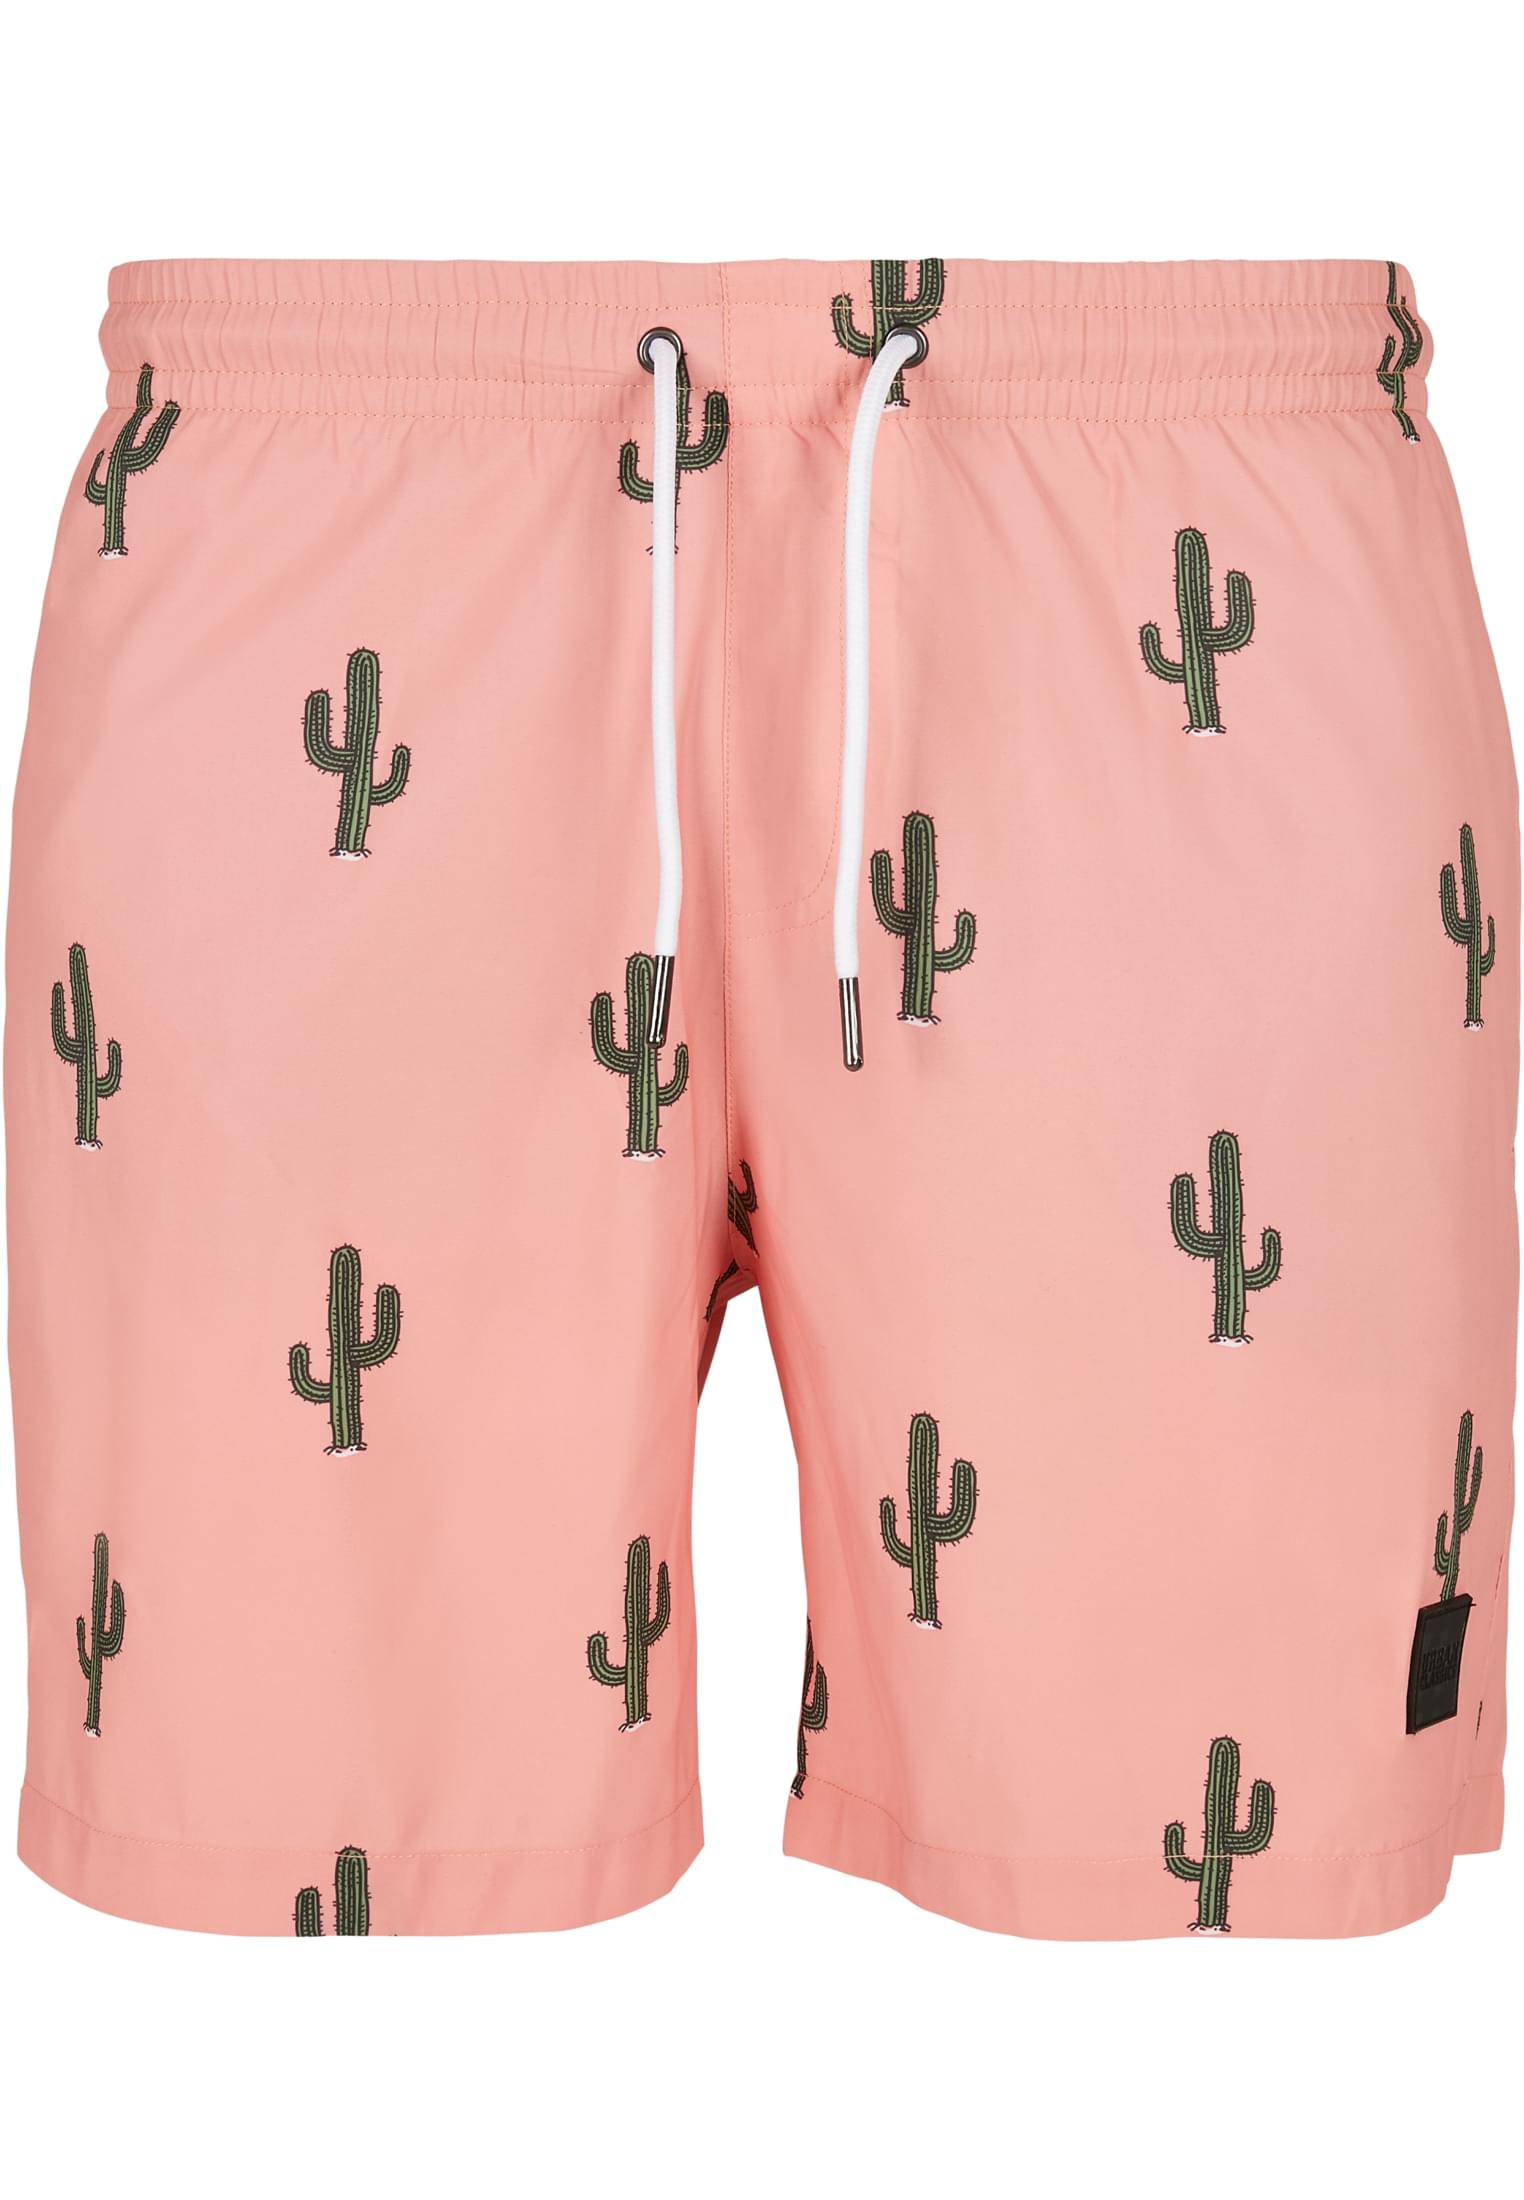 Pattern of swimming shorts cactus aop